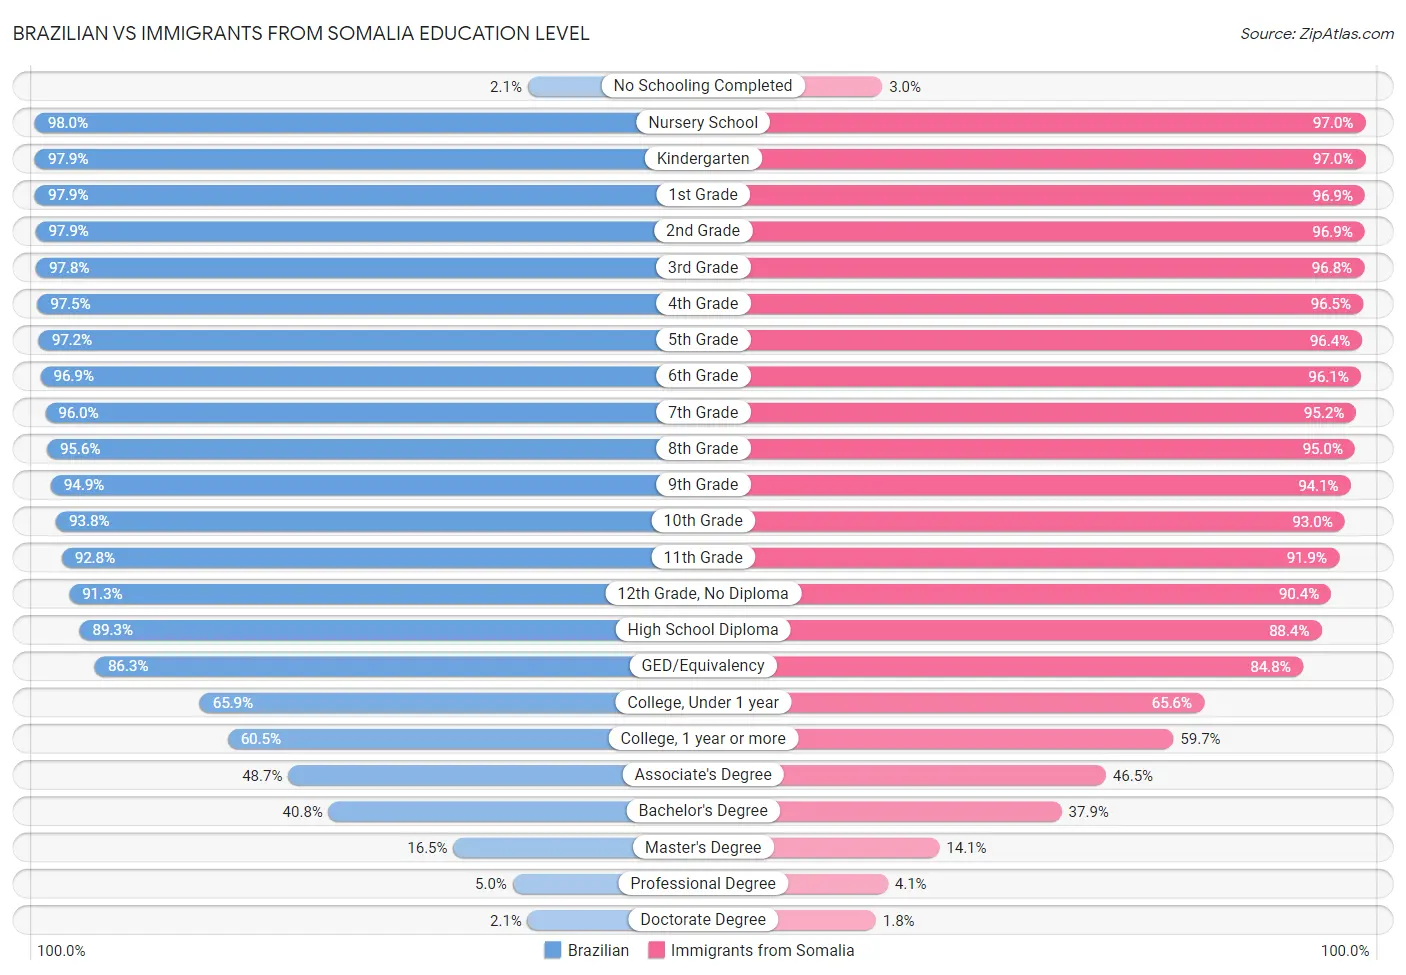 Brazilian vs Immigrants from Somalia Education Level